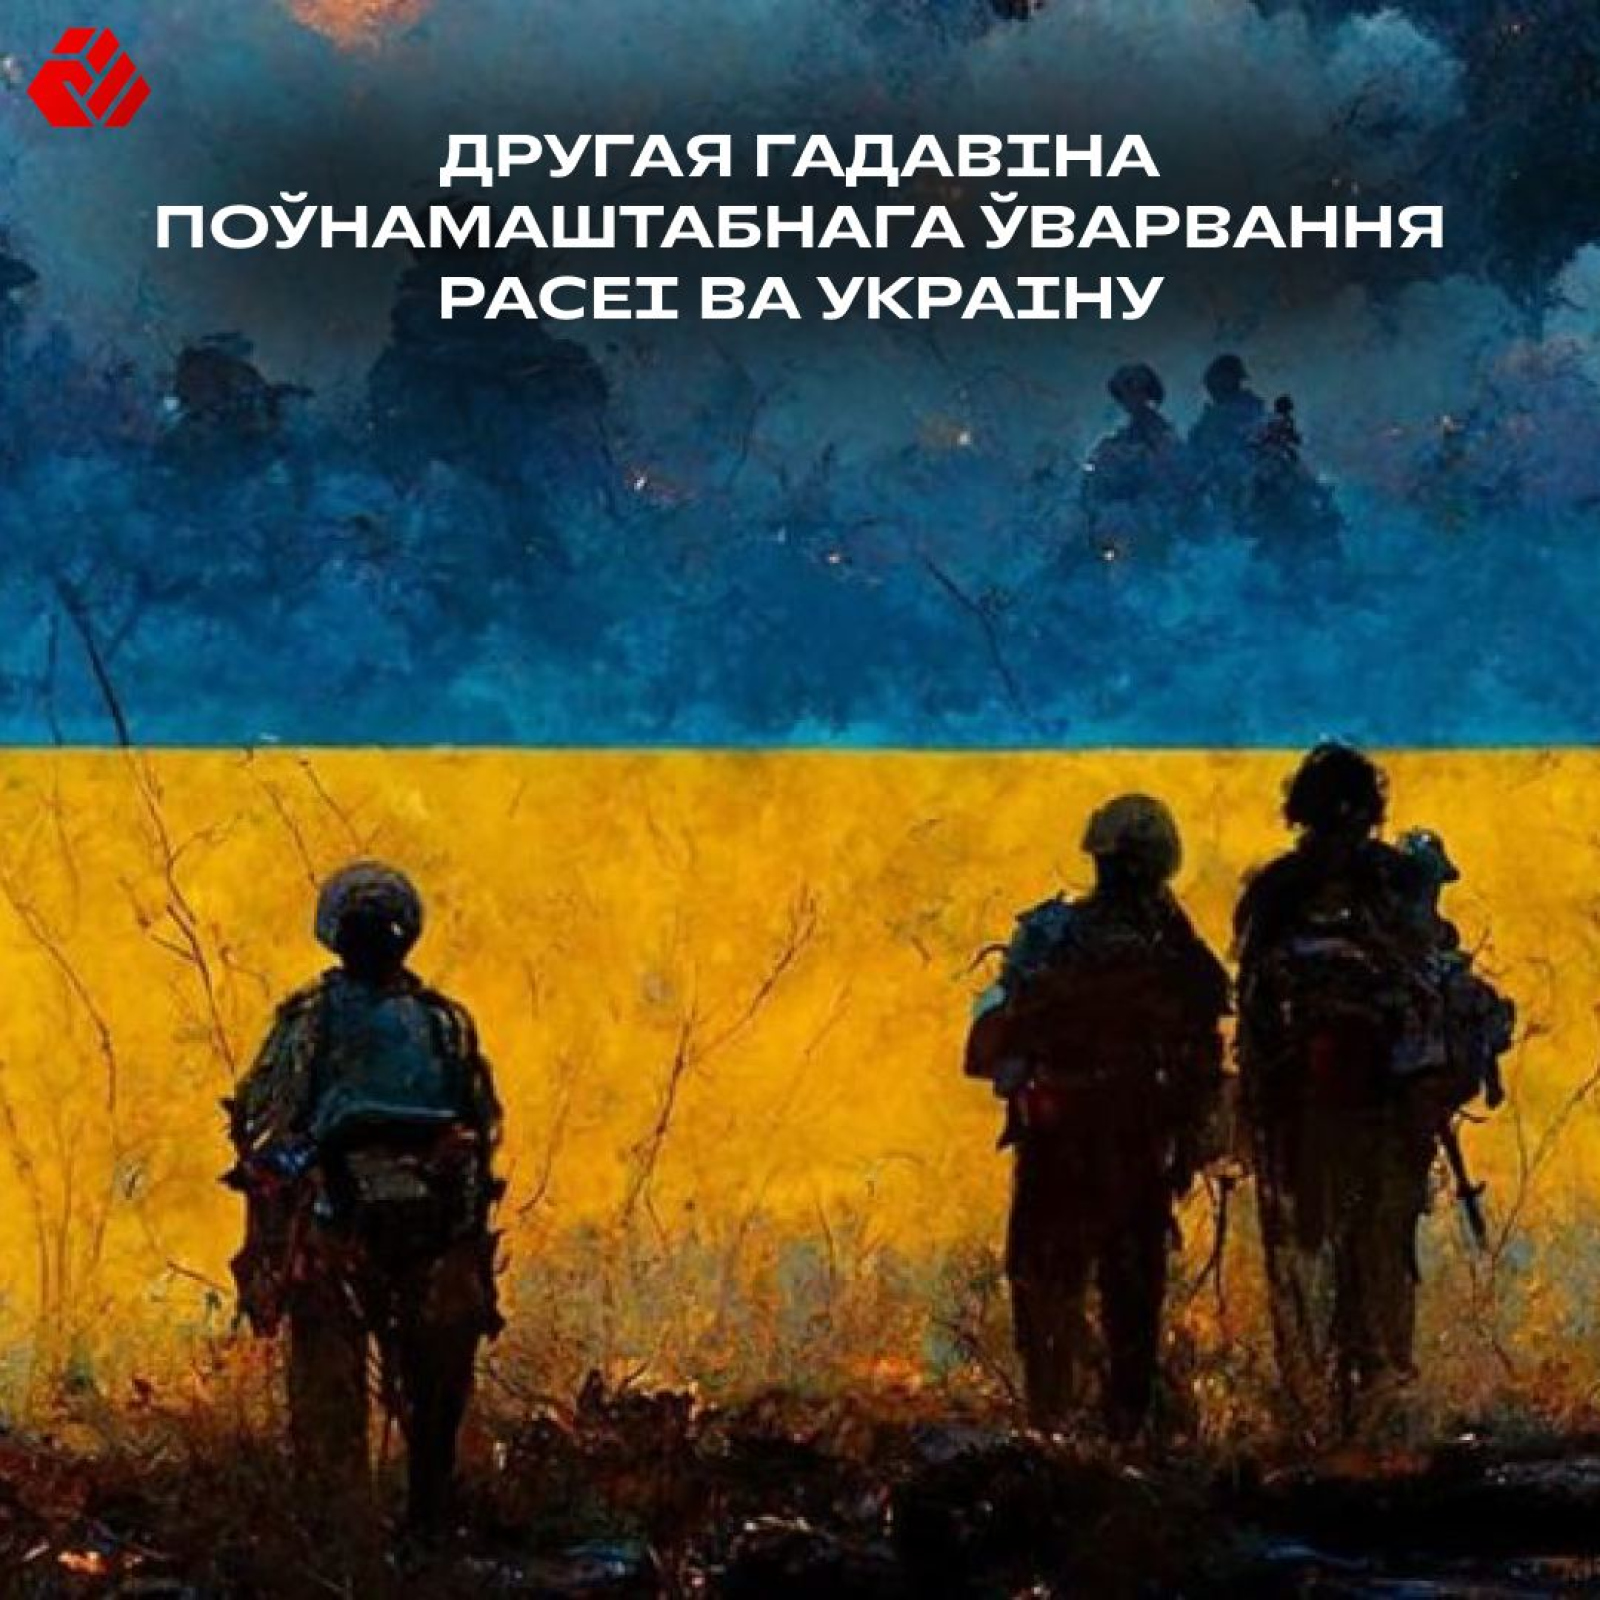 Second anniversary of Russia's full-scale invasion of Ukraine